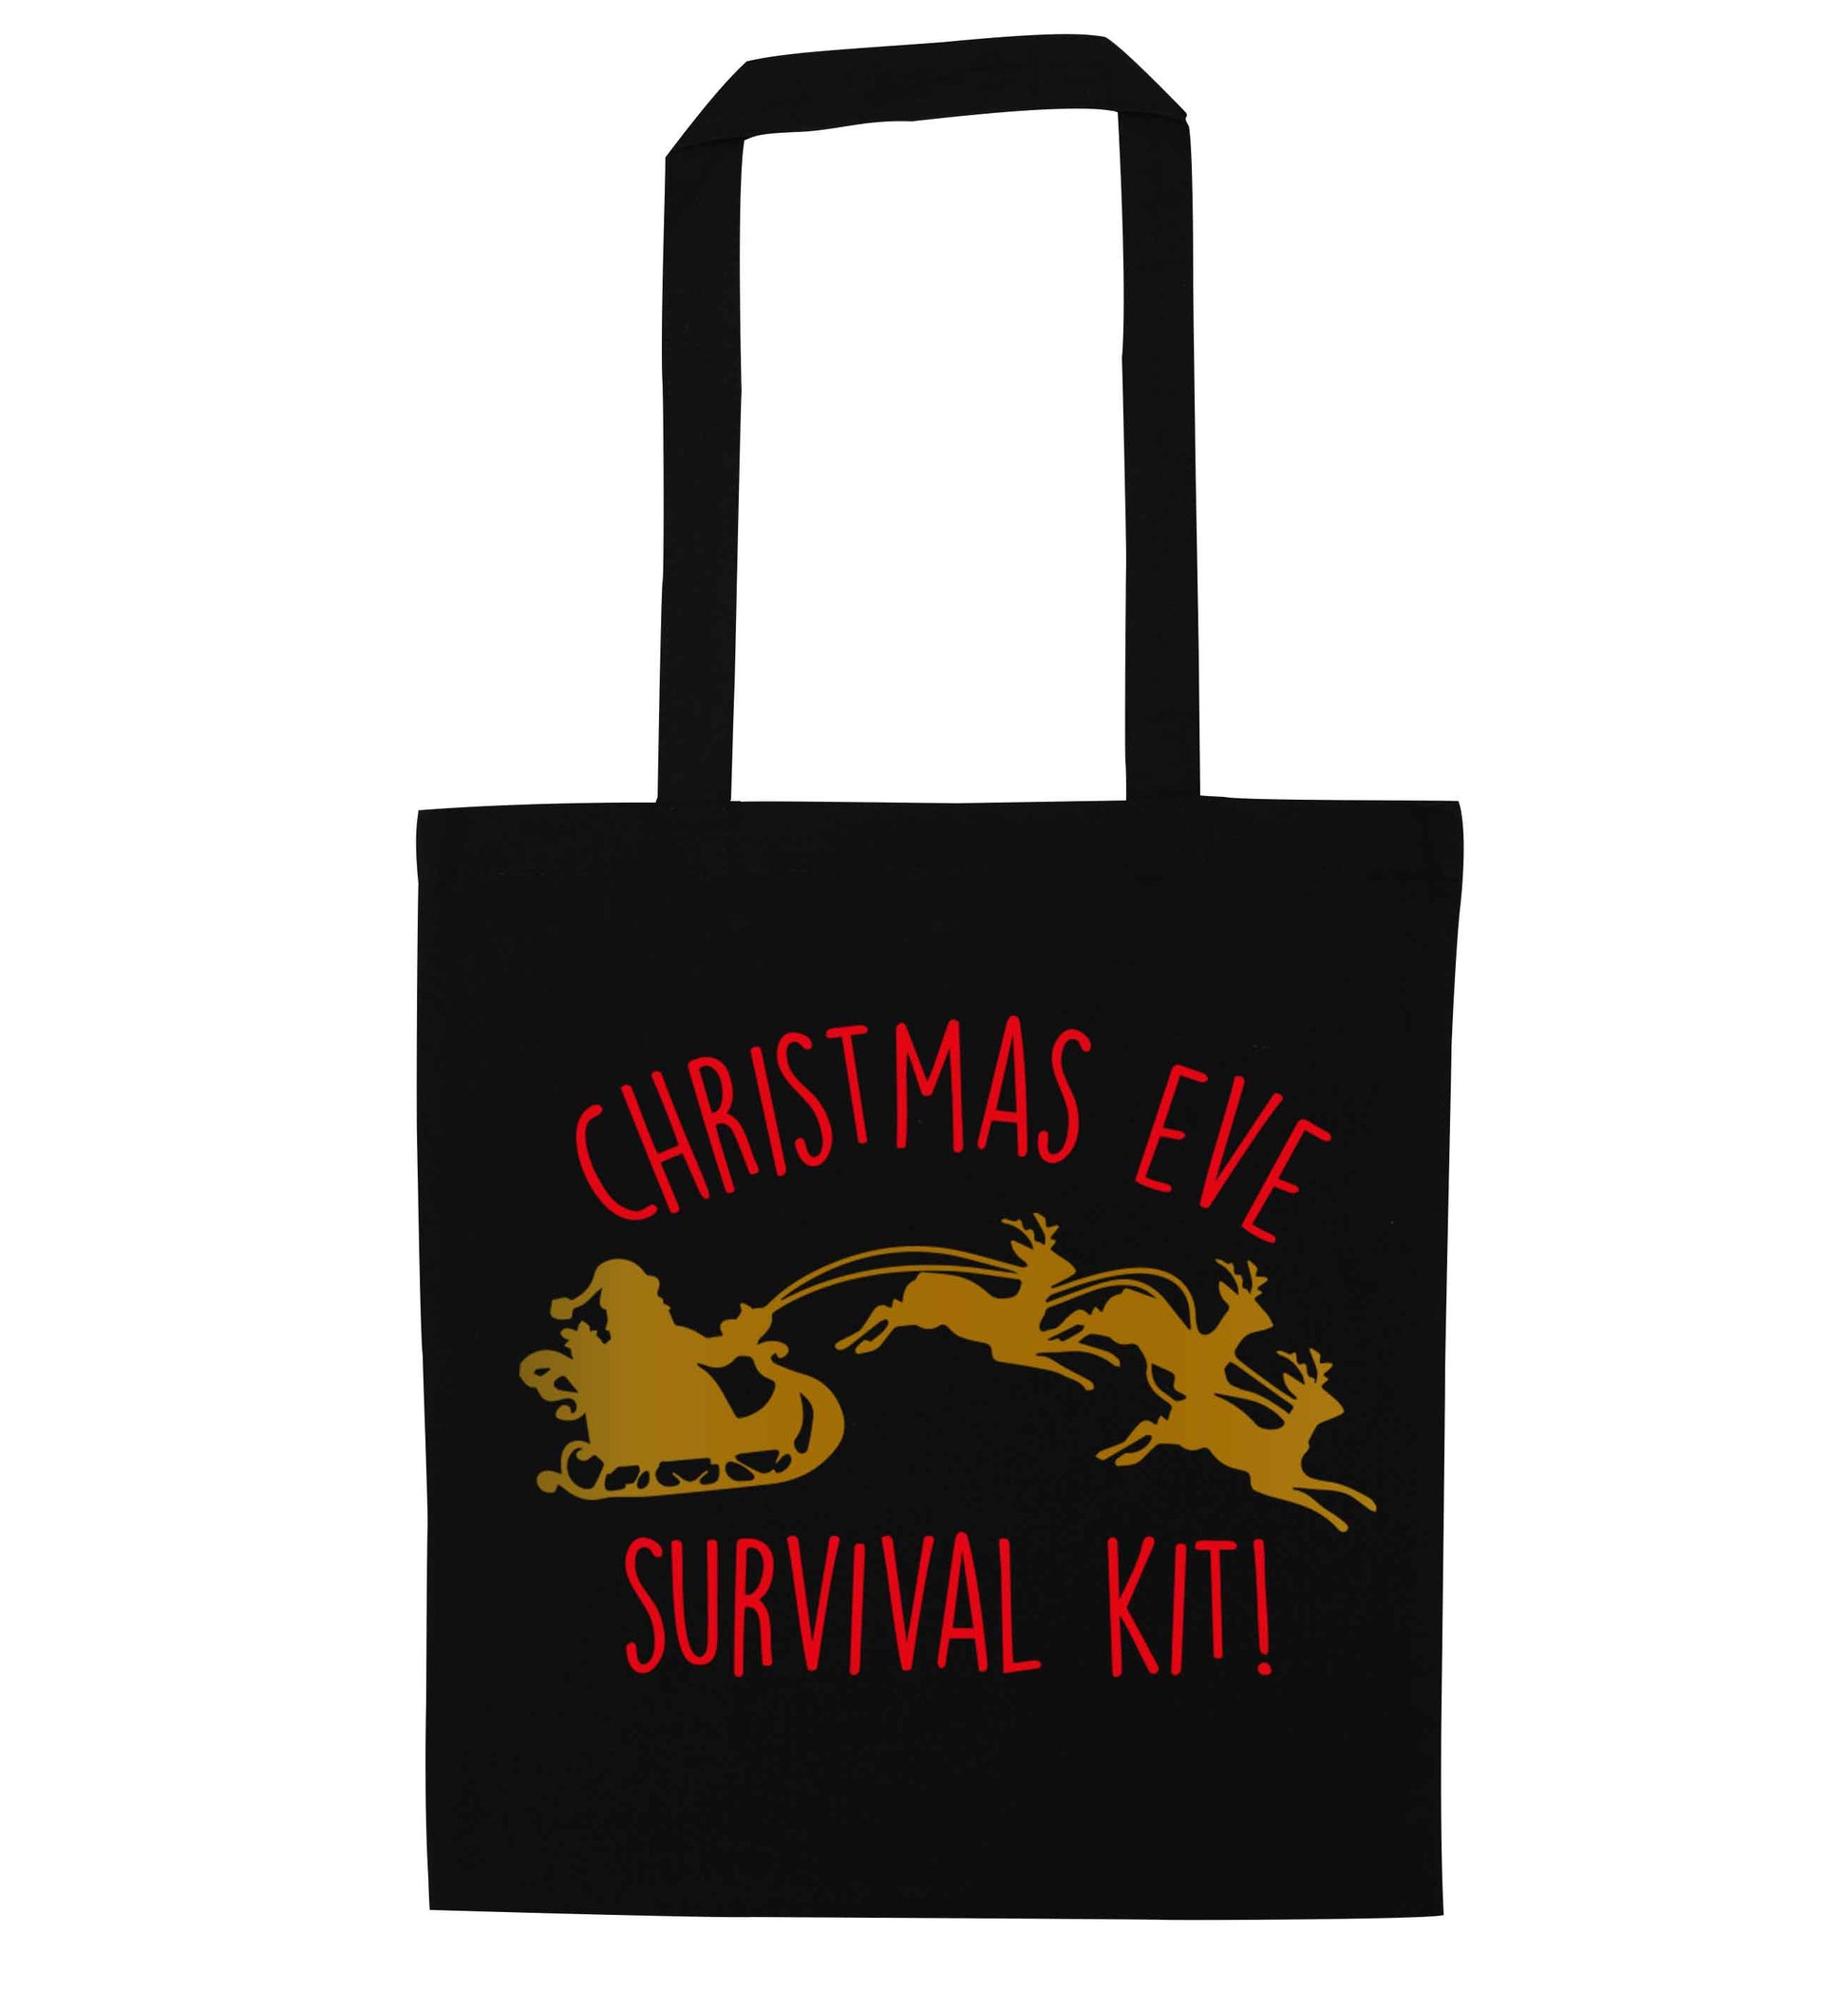 Christmas Day Survival Kitblack tote bag